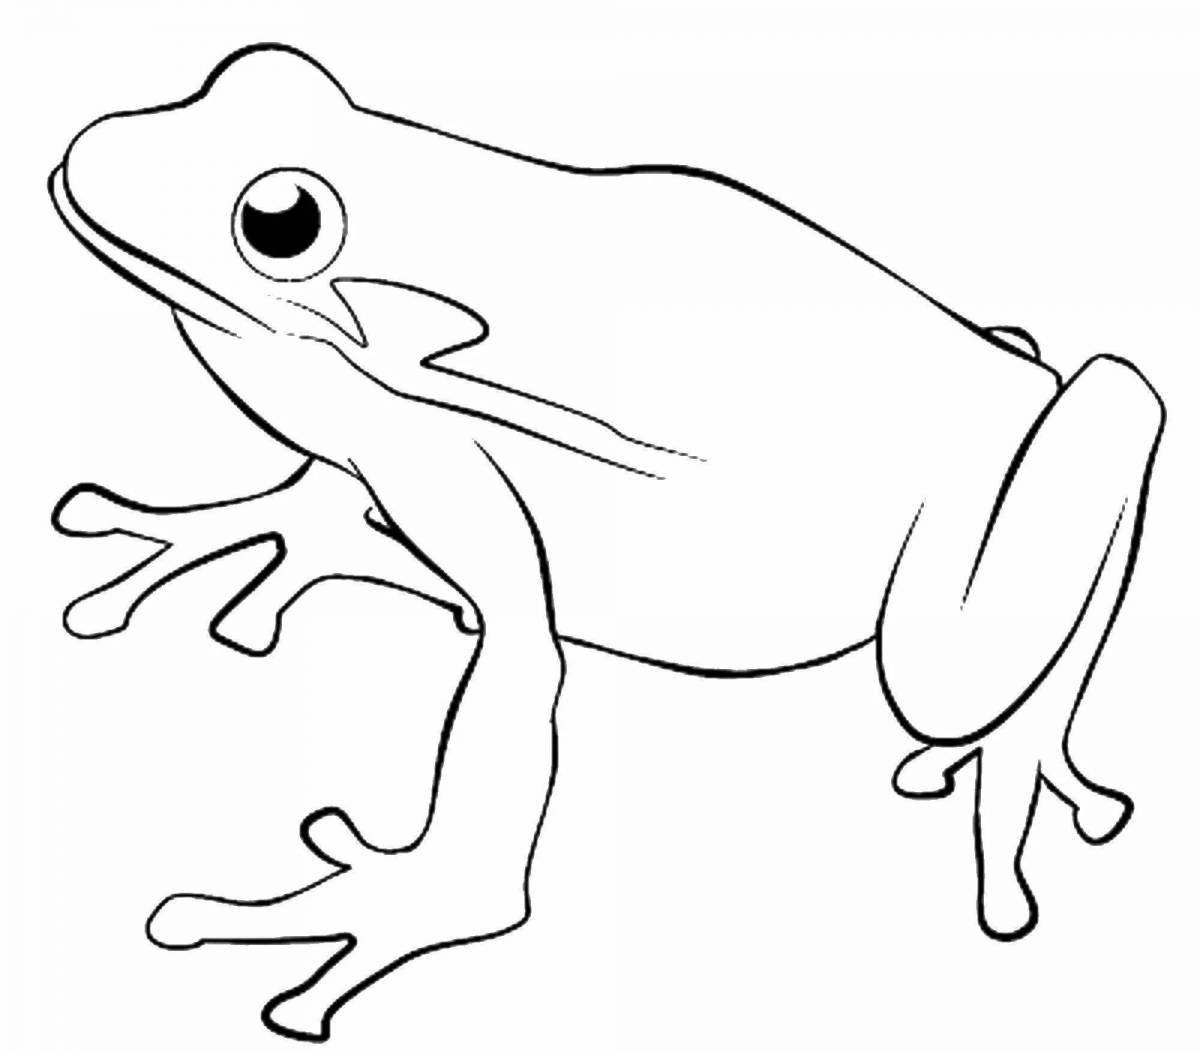 Joyful frog coloring book for kids